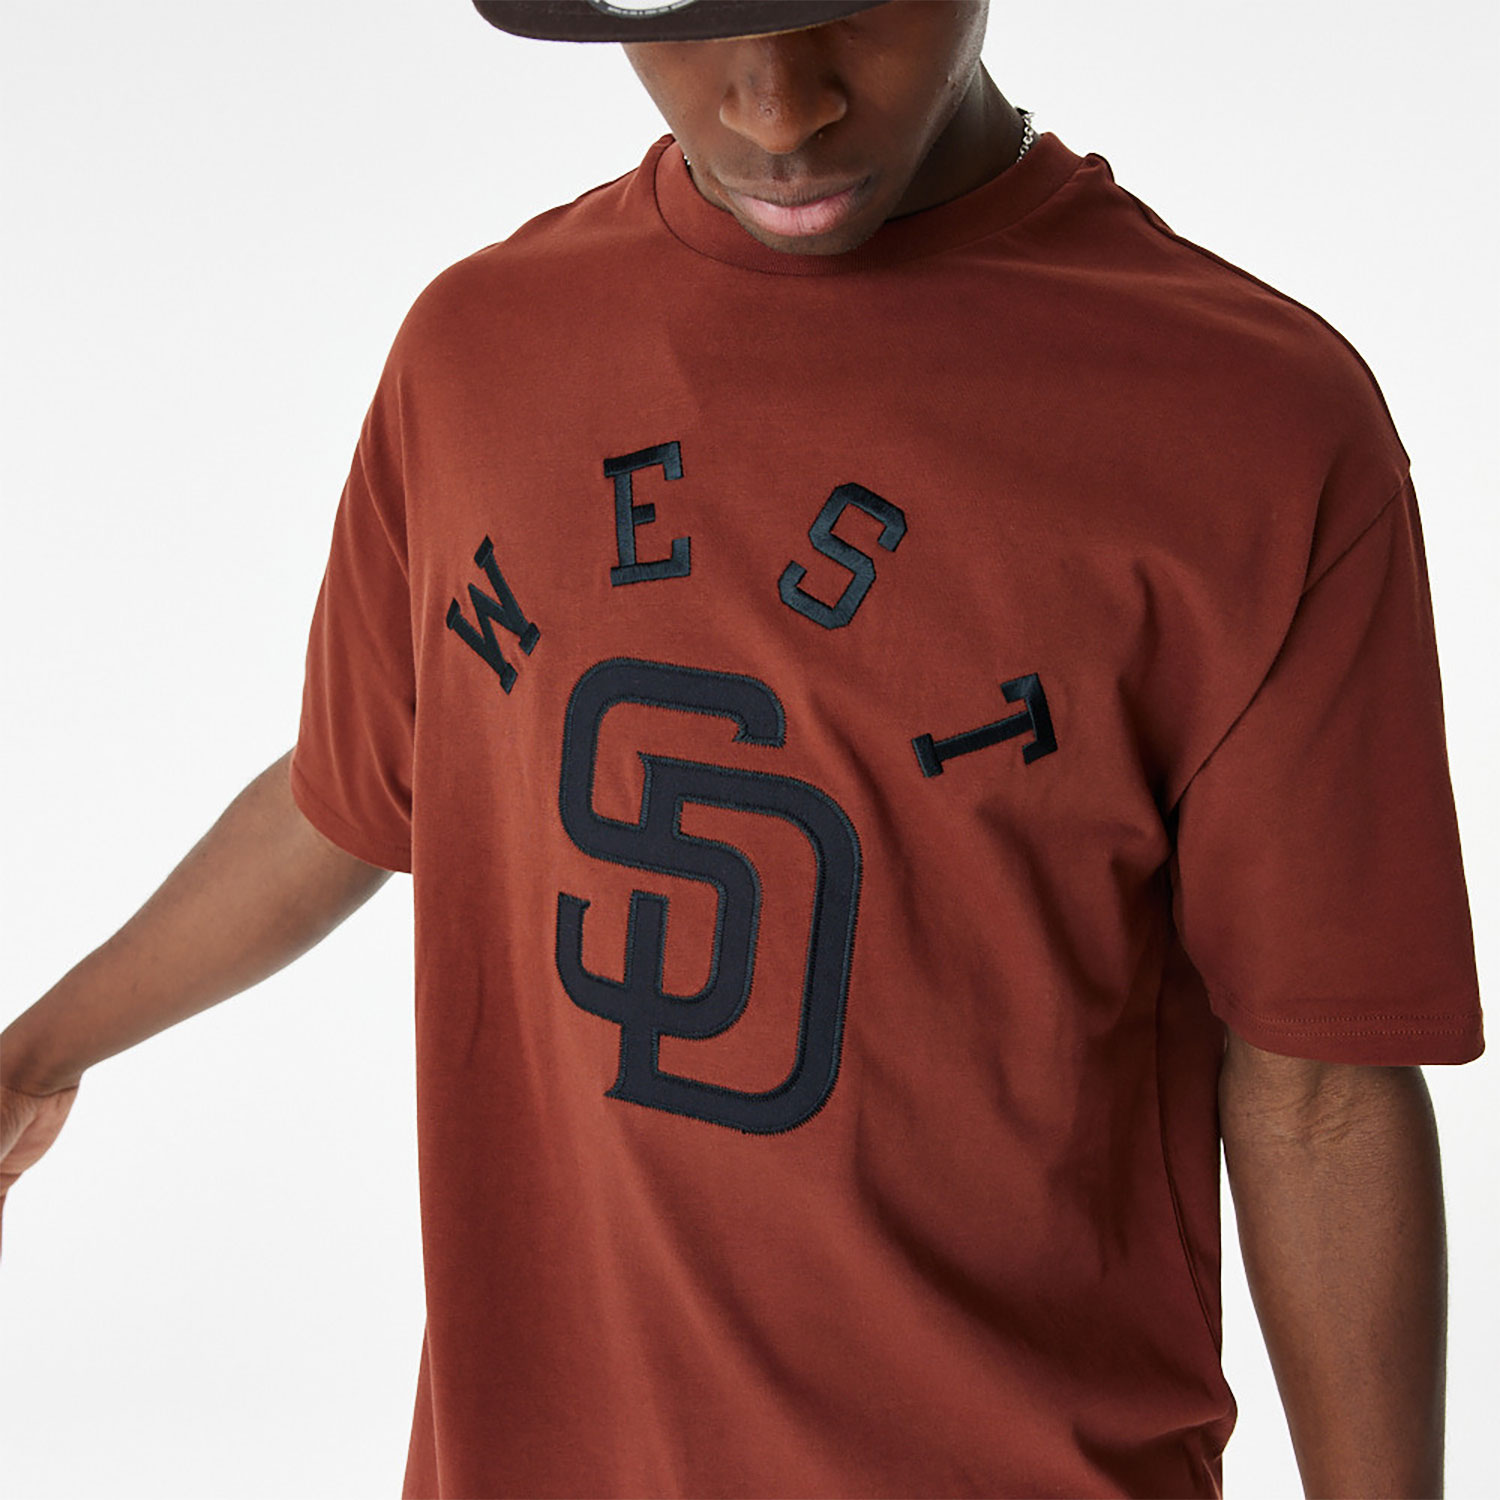 San Diego Padres Black/Tan Camo T-Shirt Size: Large